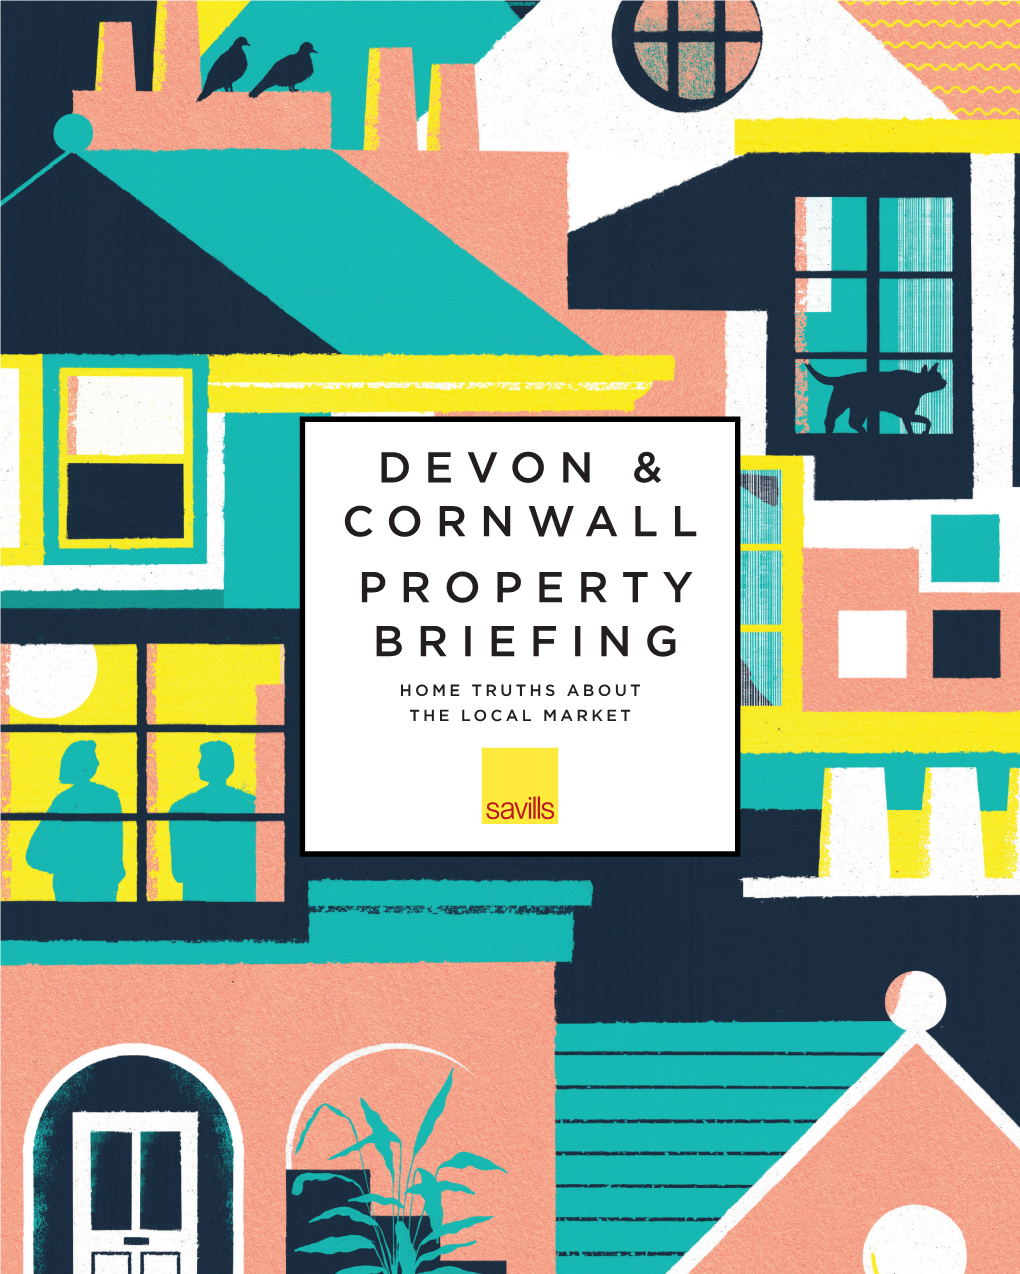 Devon & Cornwall Property Briefing